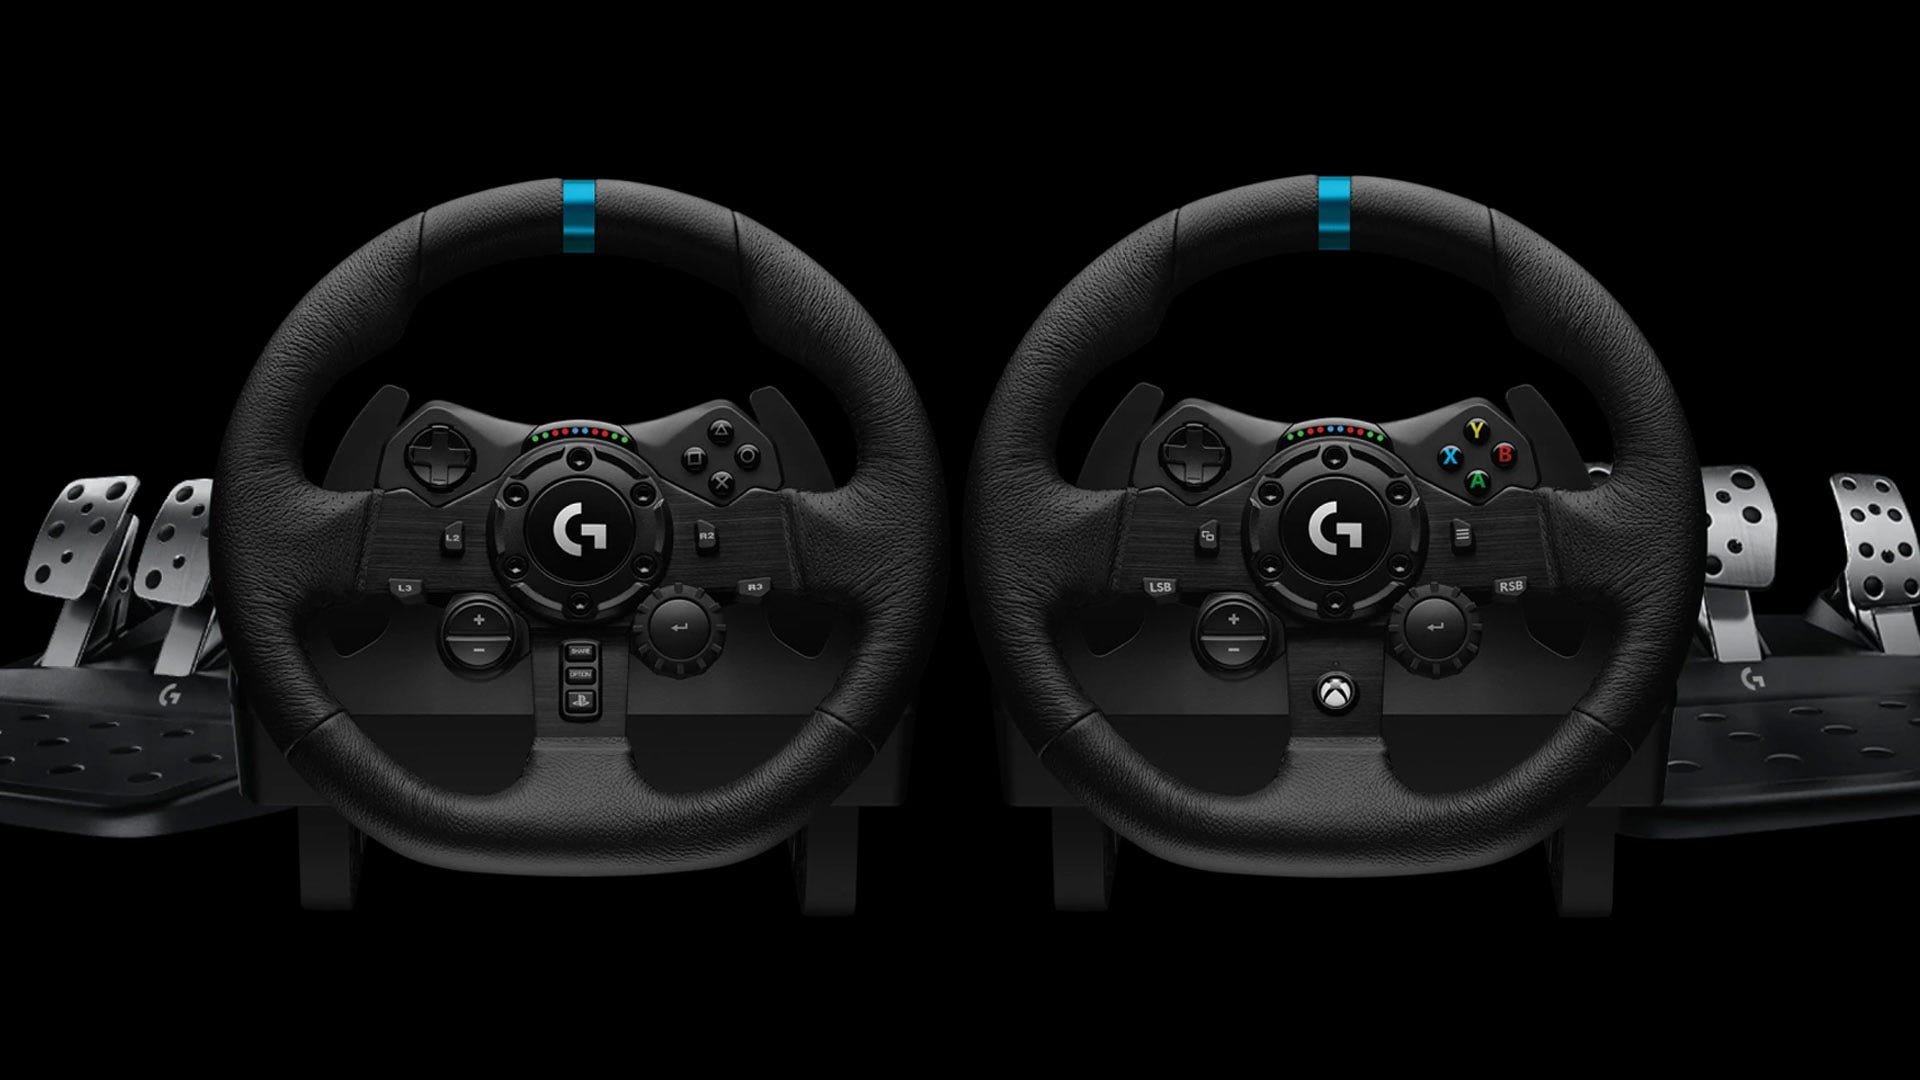 Logitechs $400 G923 Race Wheel ger otrolig feedback till simuleringsfans